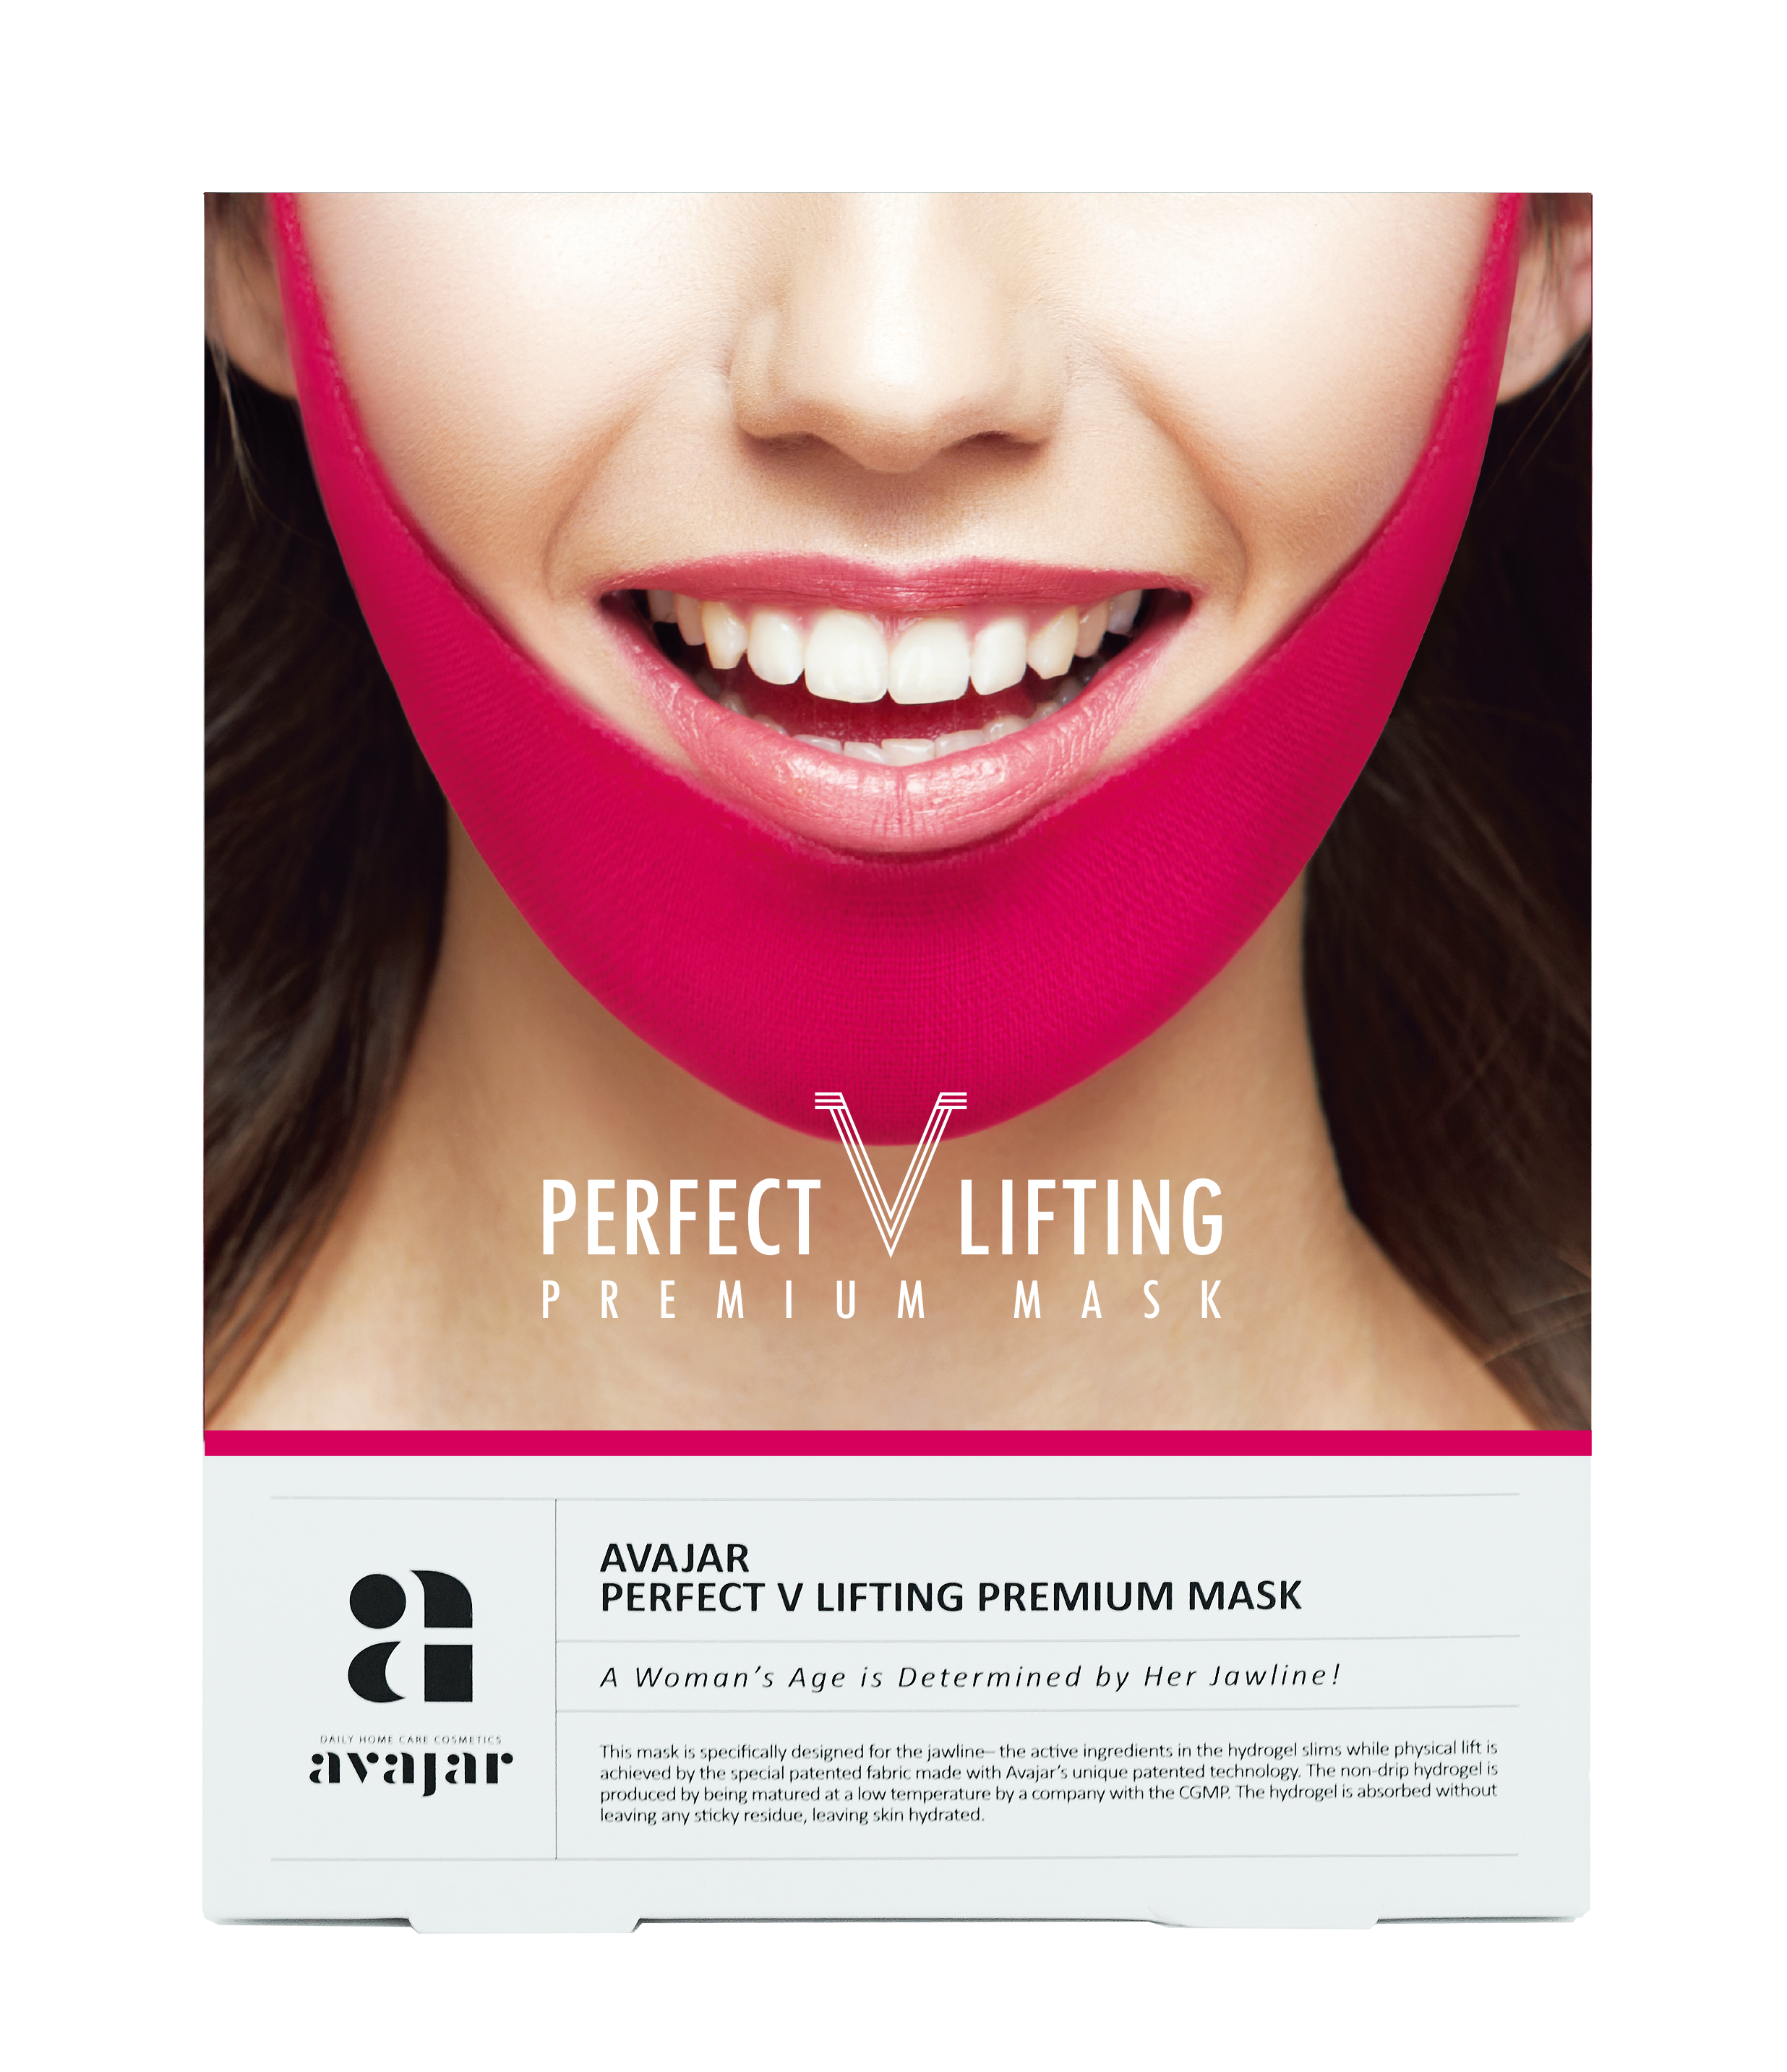 AVAJAR Perfect V LIFTING Premium Mask (1EA) - Dotrade Express. Trusted Korea Manufacturers. Find the best Korean Brands